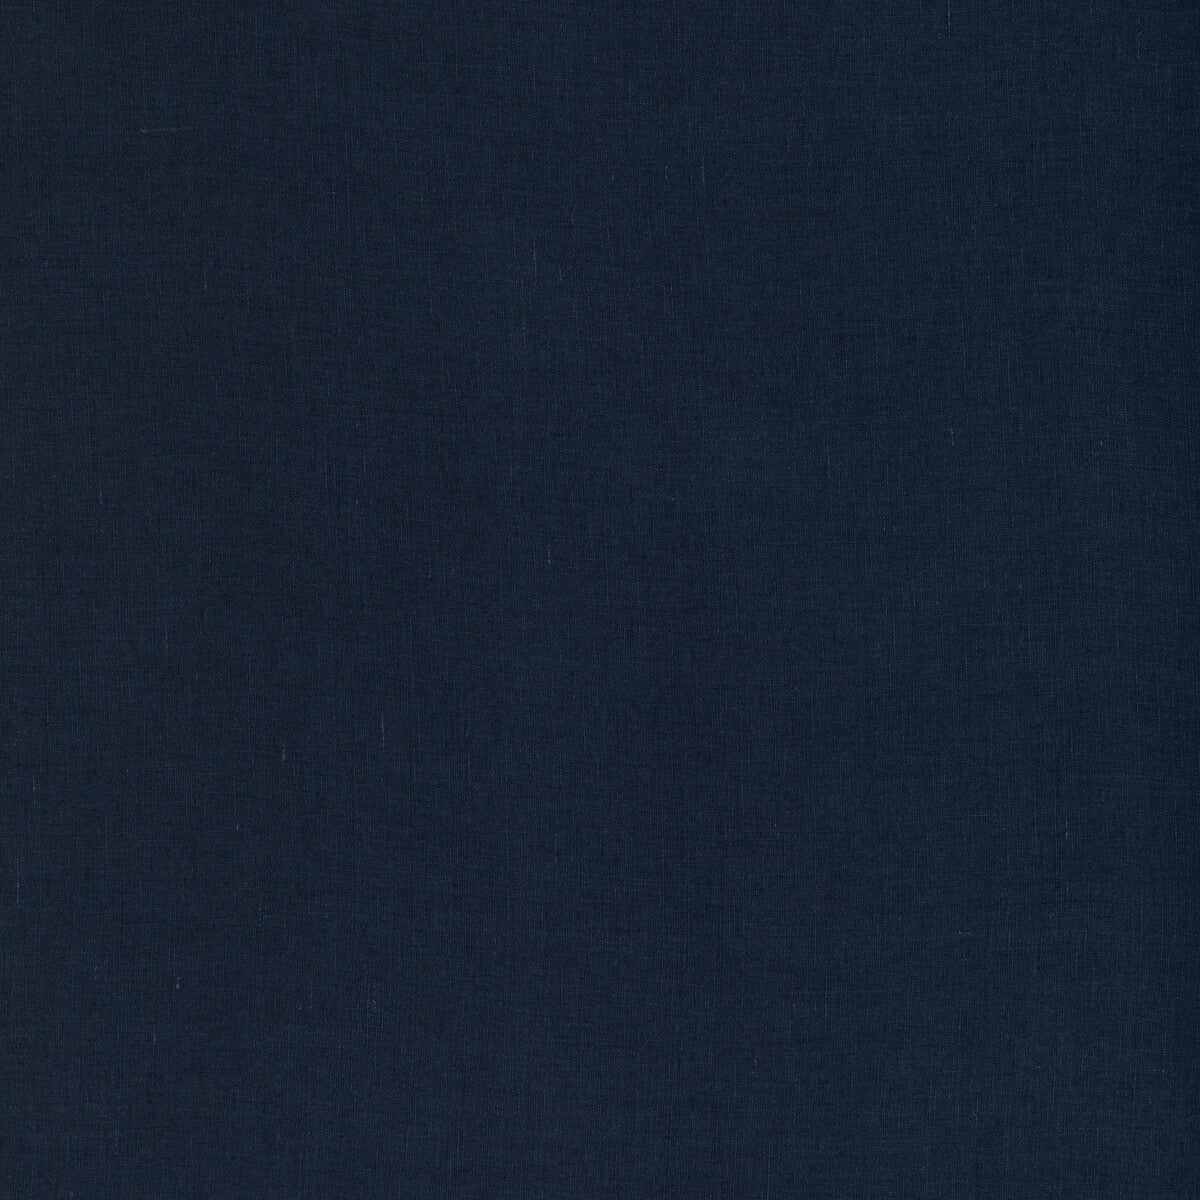 Kravet Design fabric in 90013-50 color - pattern 90013.50.0 - by Kravet Design in the Reveal collection